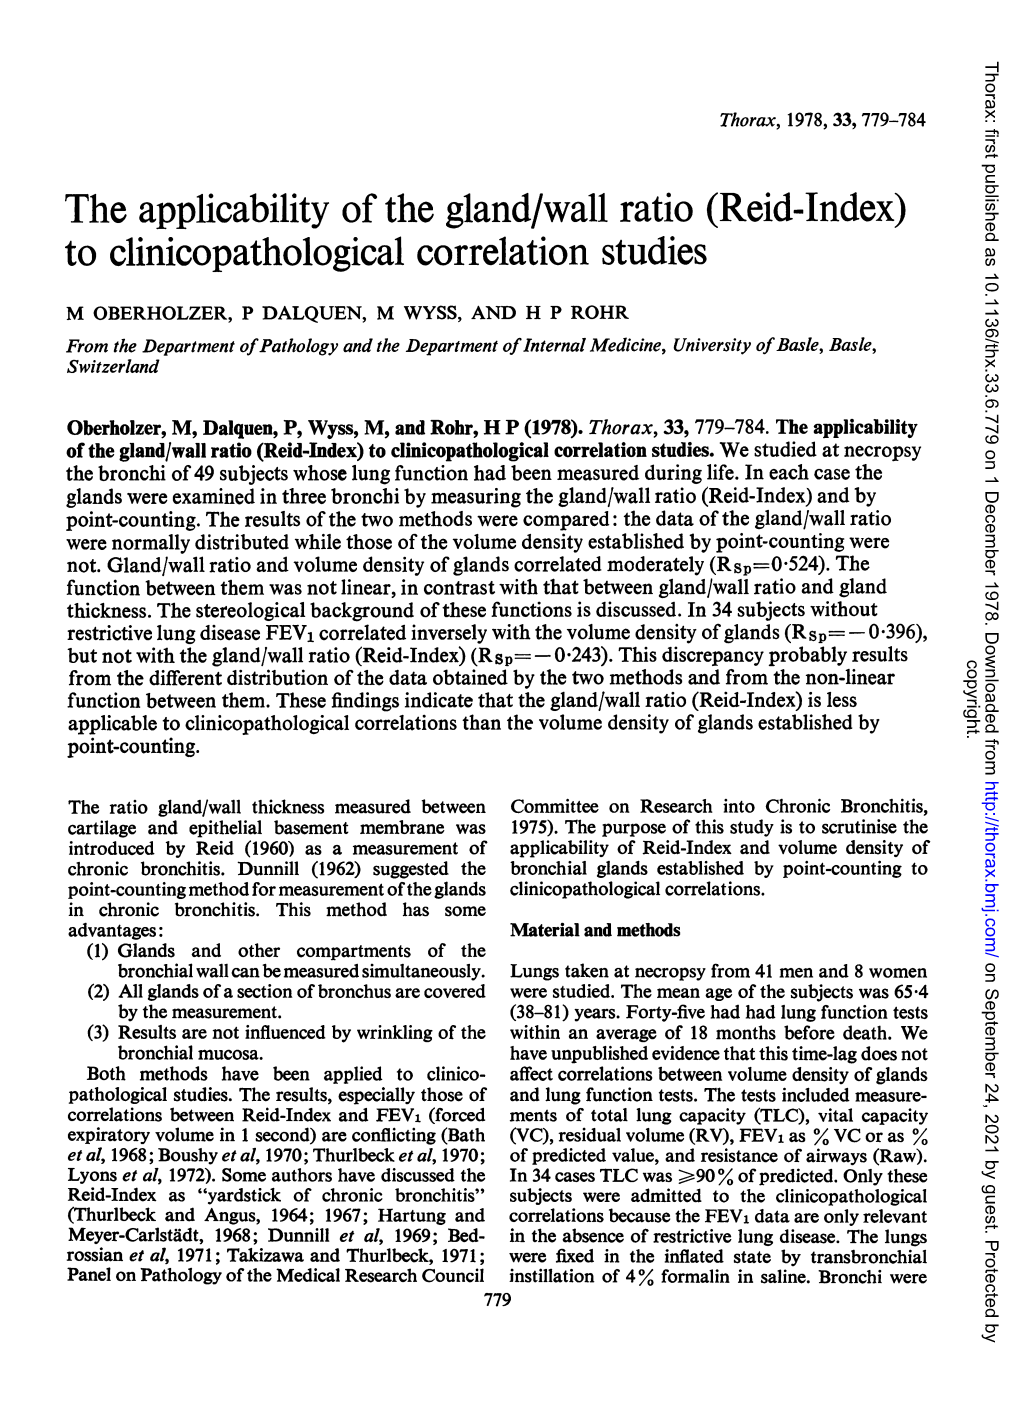 Reid-Index) to Clinicopathological Correlation Studies